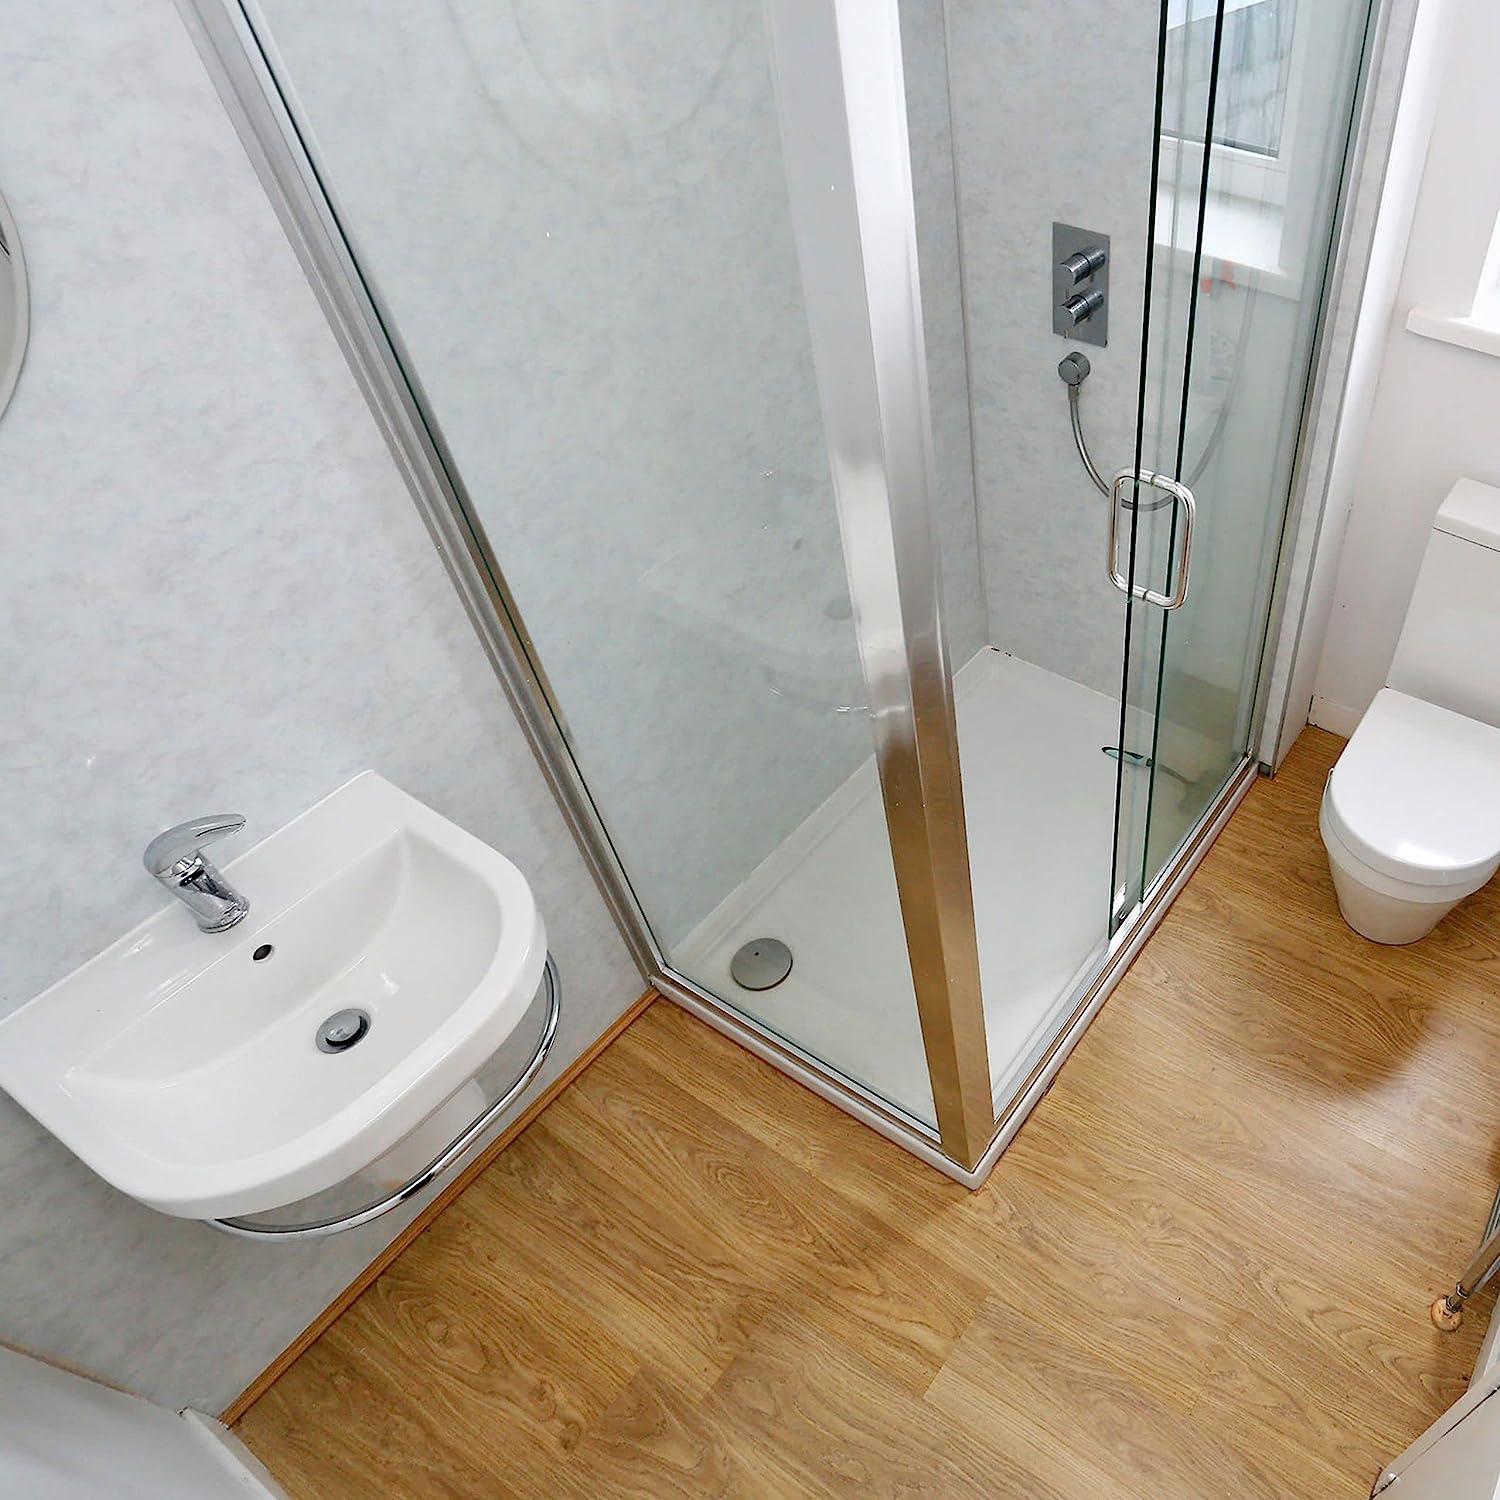 Somafix Sanitary Bathroom & Kitchen Silicone S341, Our Products > Somafix  Sanitary Bathroom & Kitchen Silicone S341